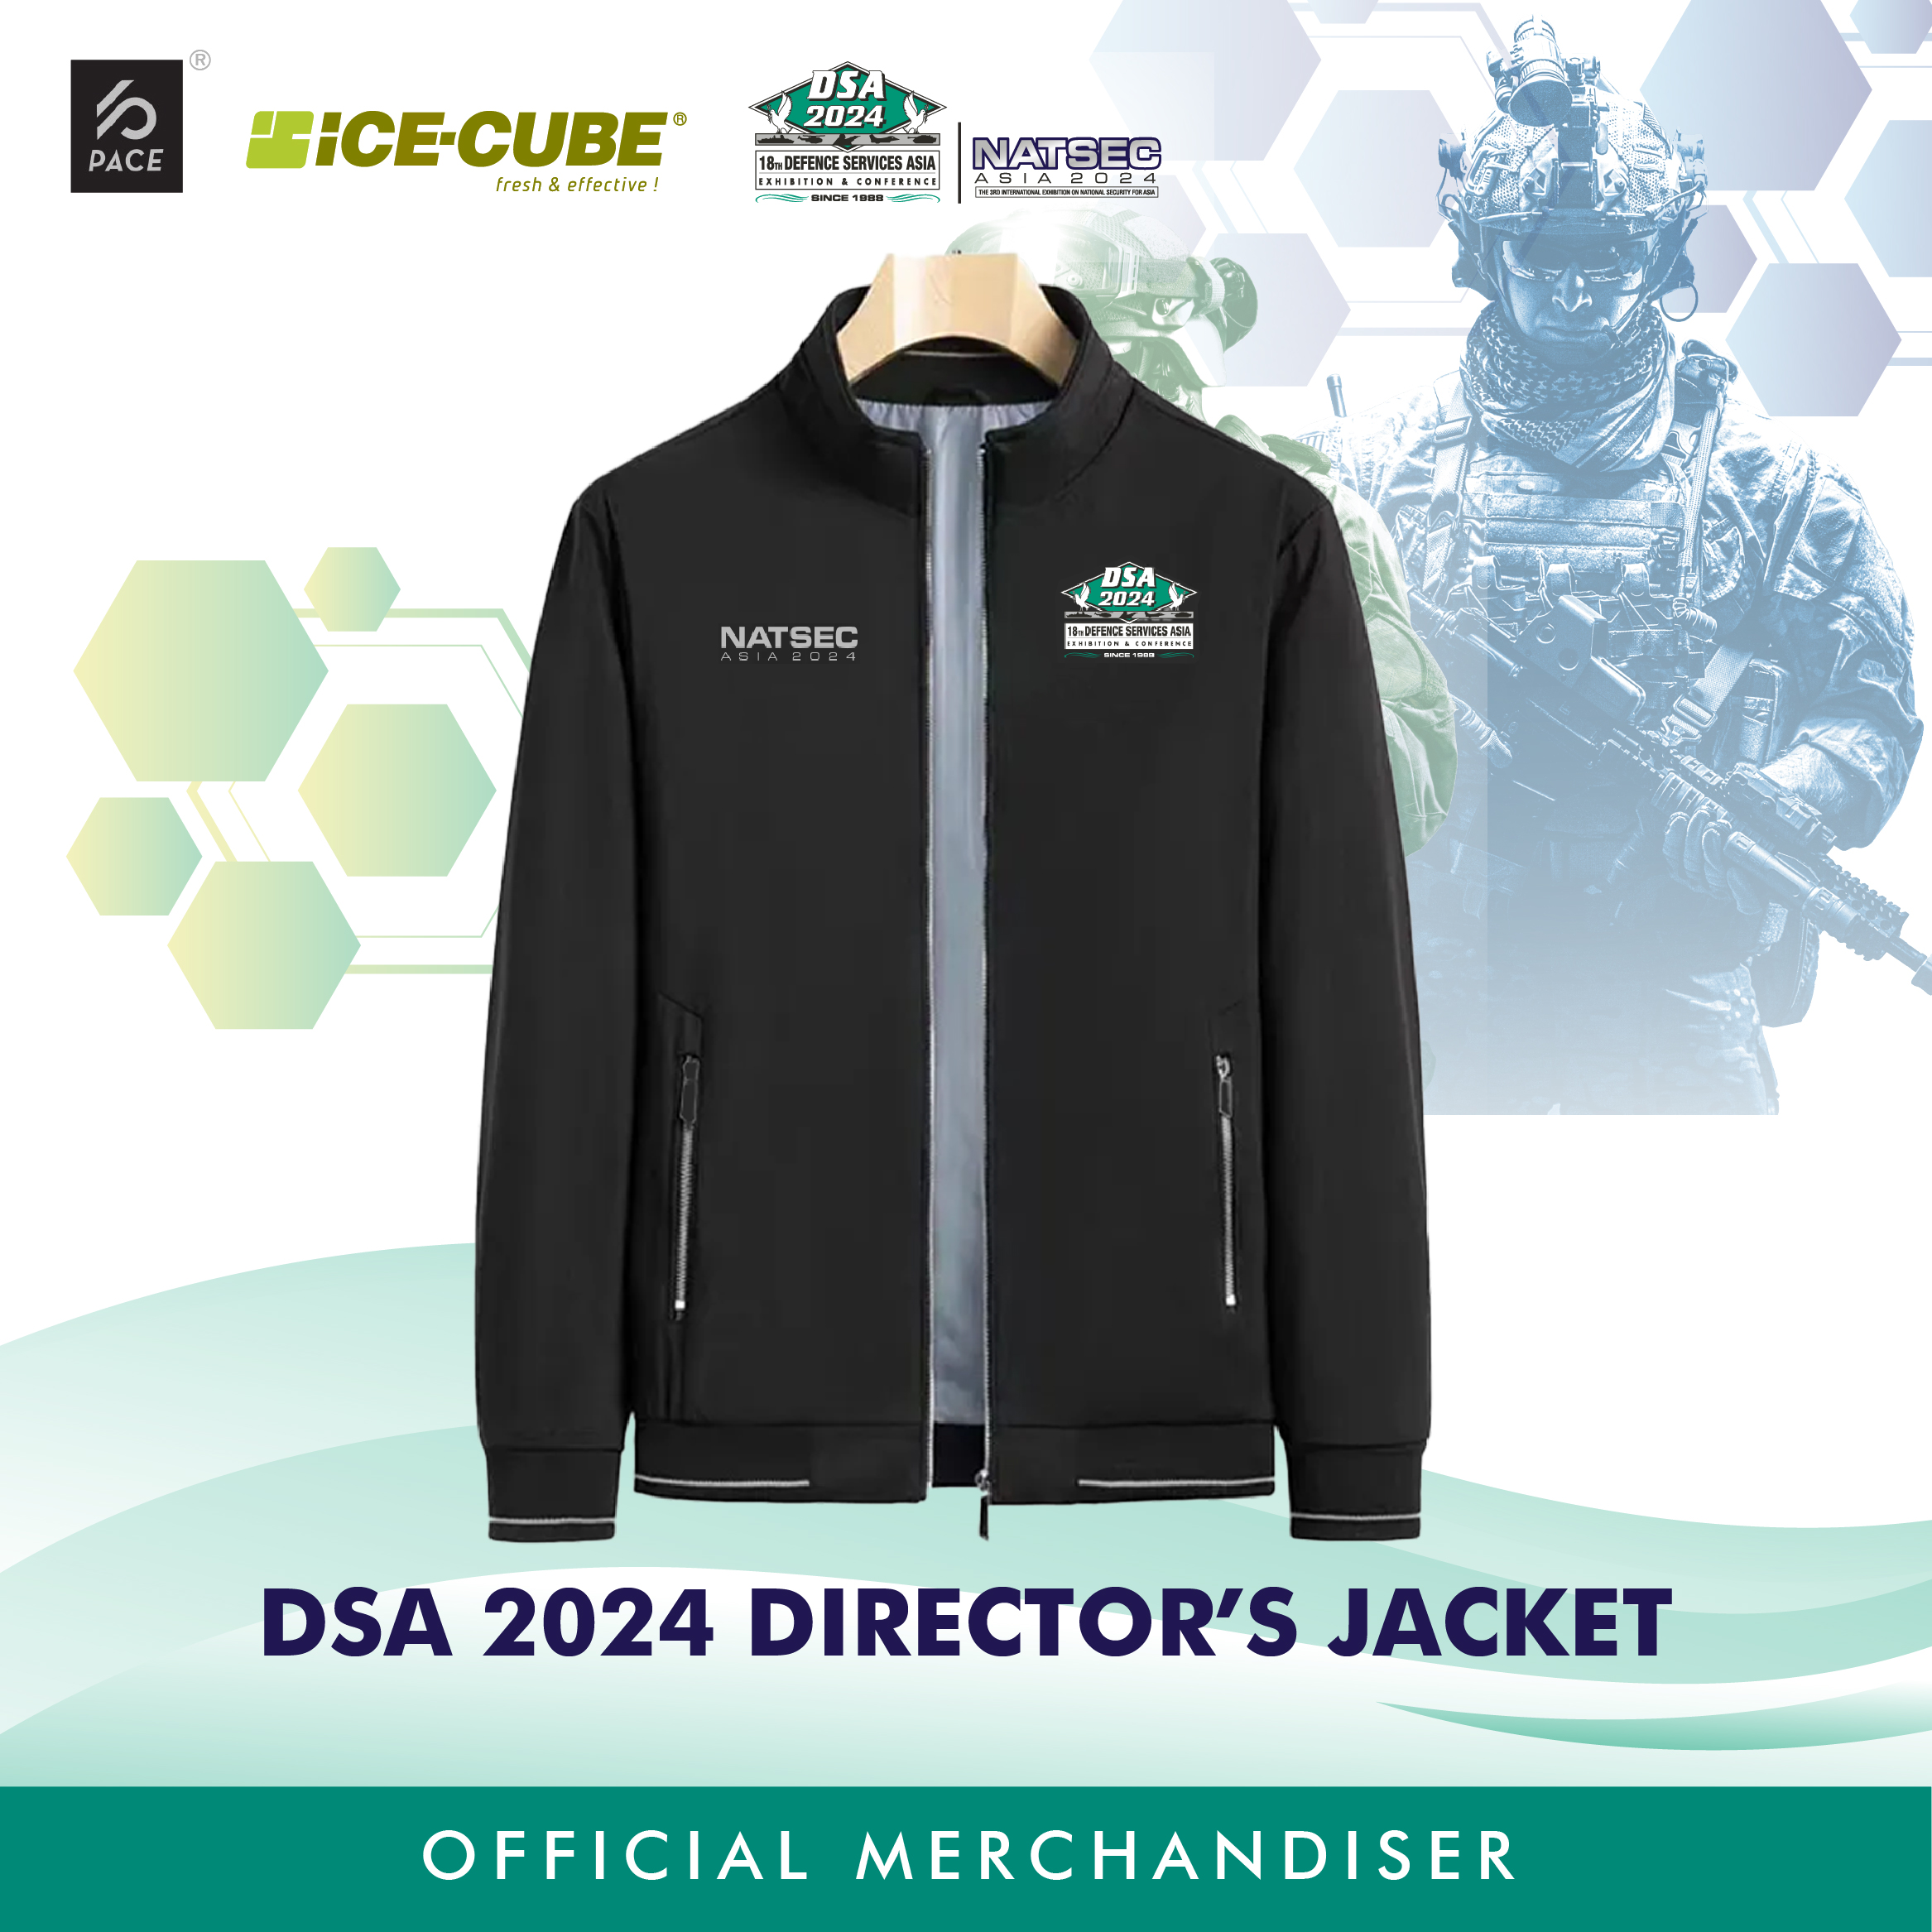 DSA 2024 DIRECTOR'S JACKET